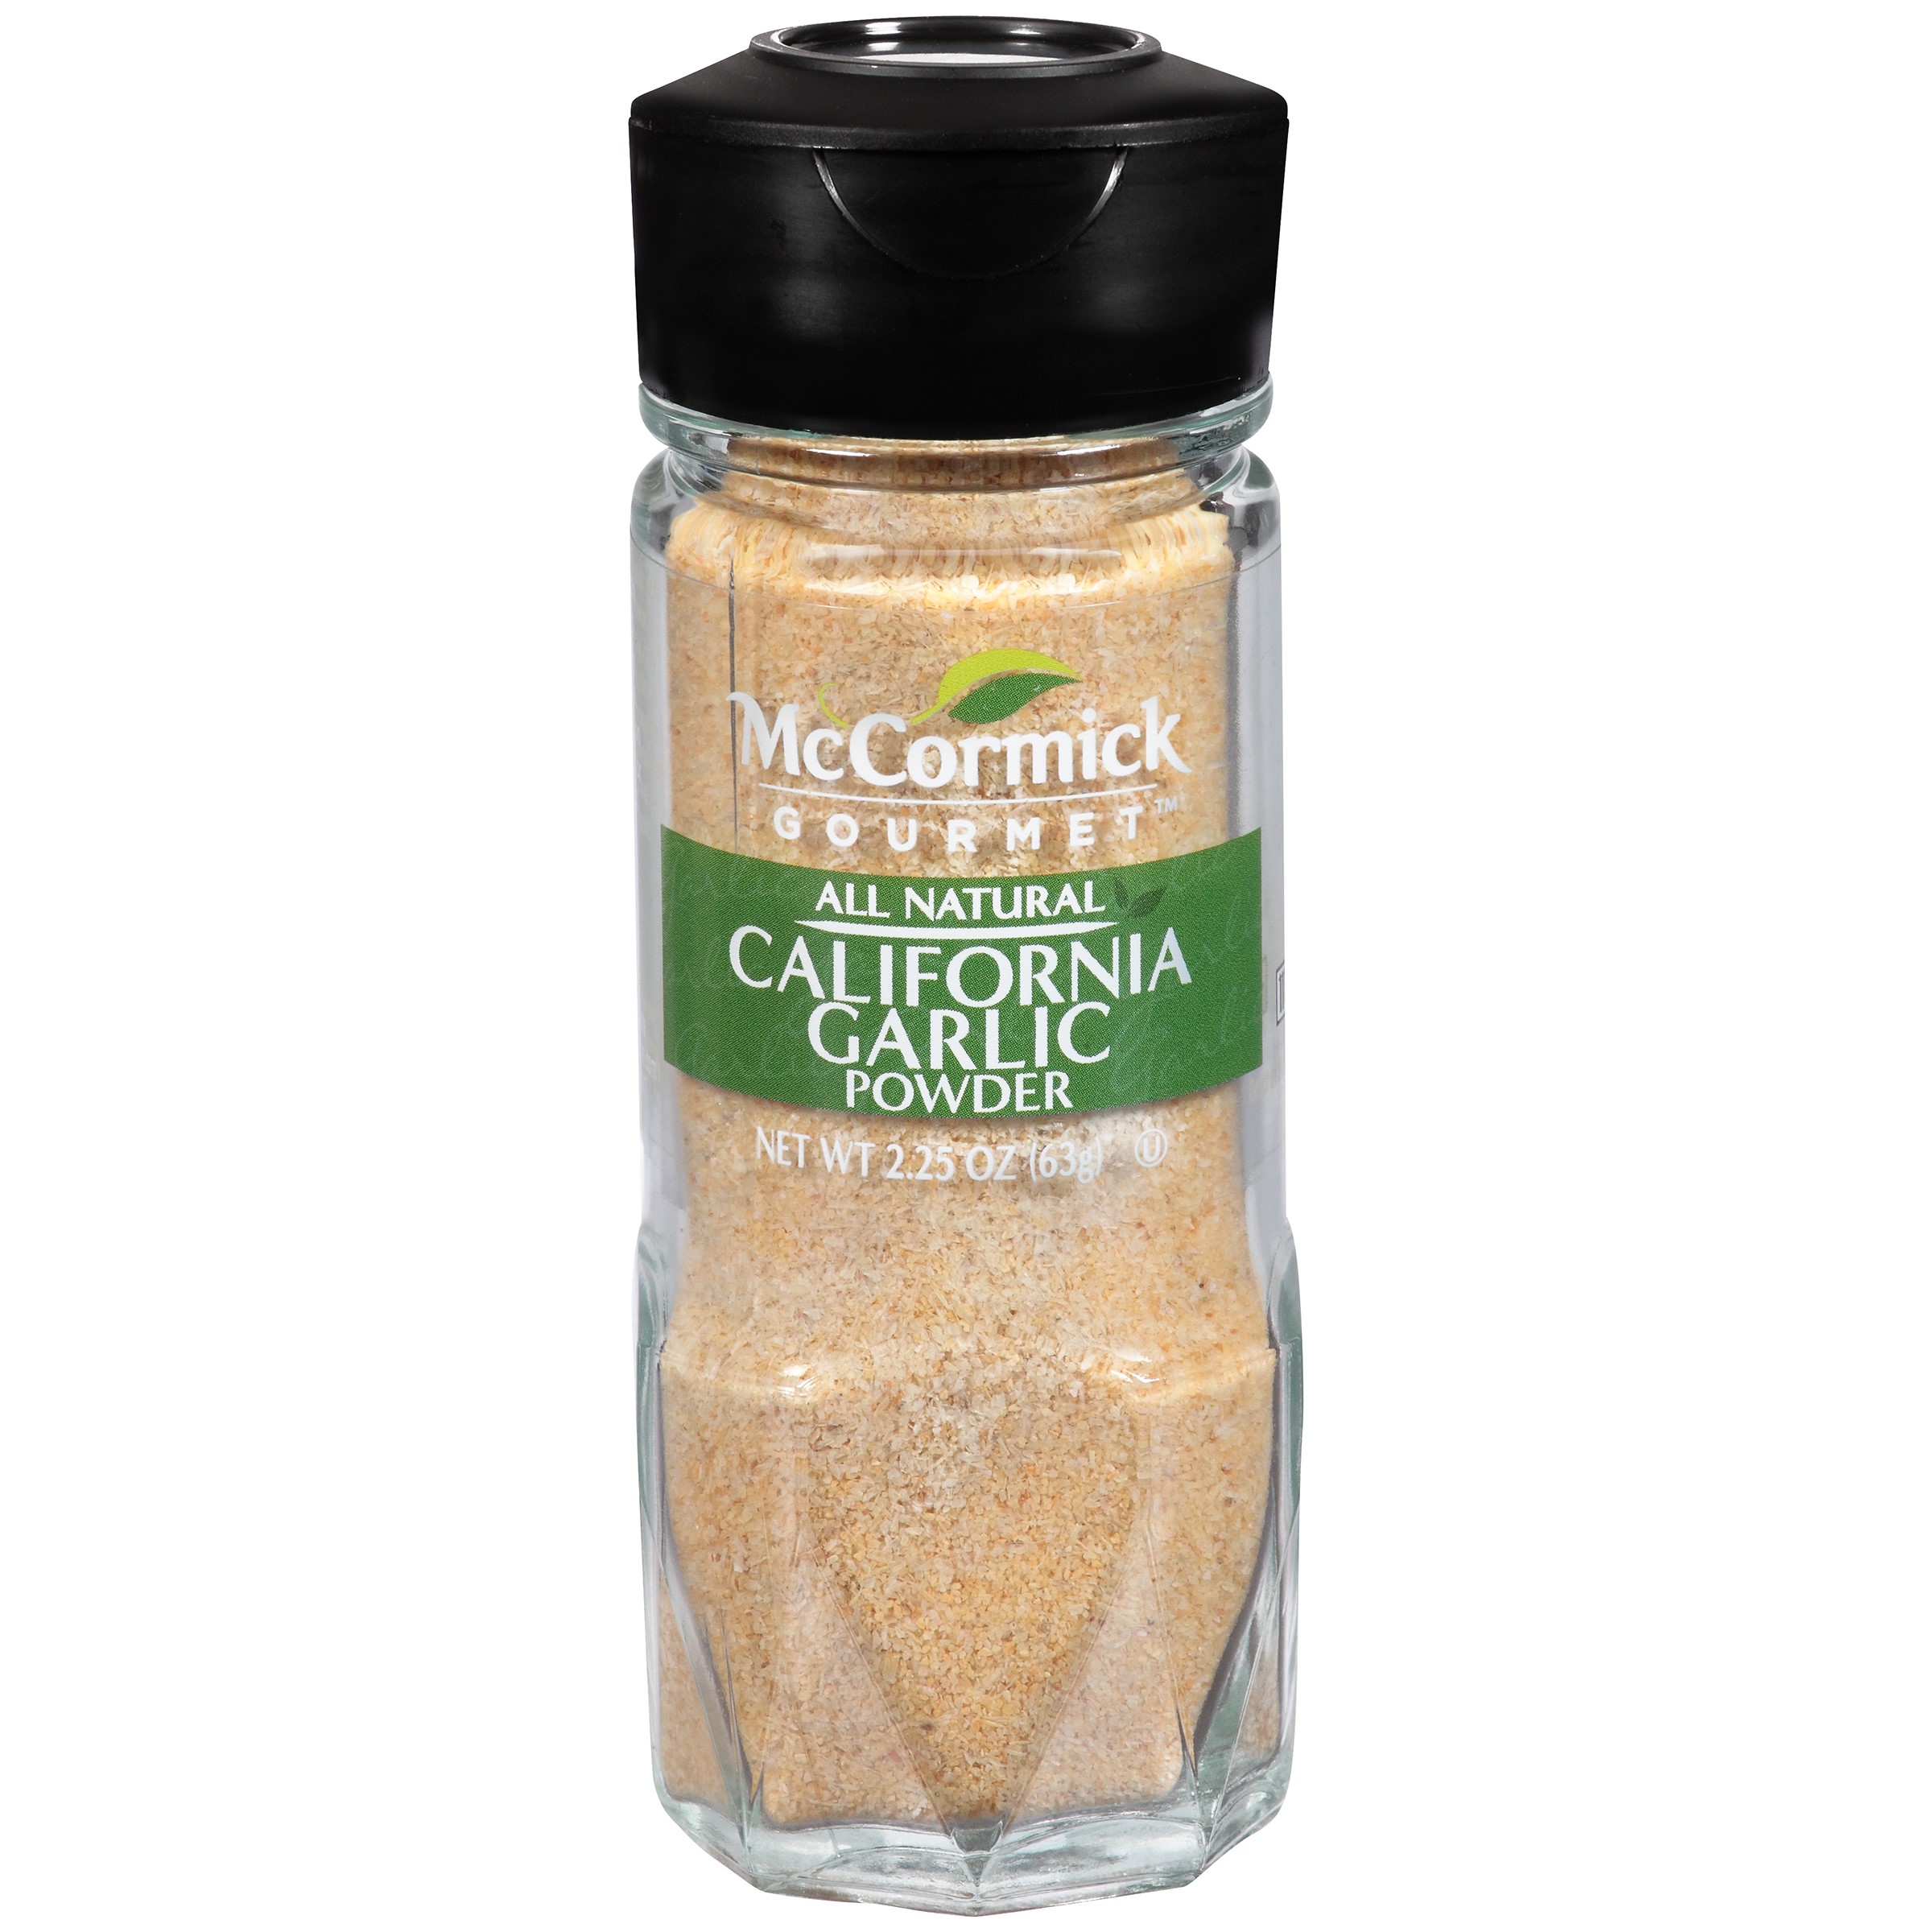 McCormick Gourmet California Garlic Powder, 2.25 Oz - image 1 of 4